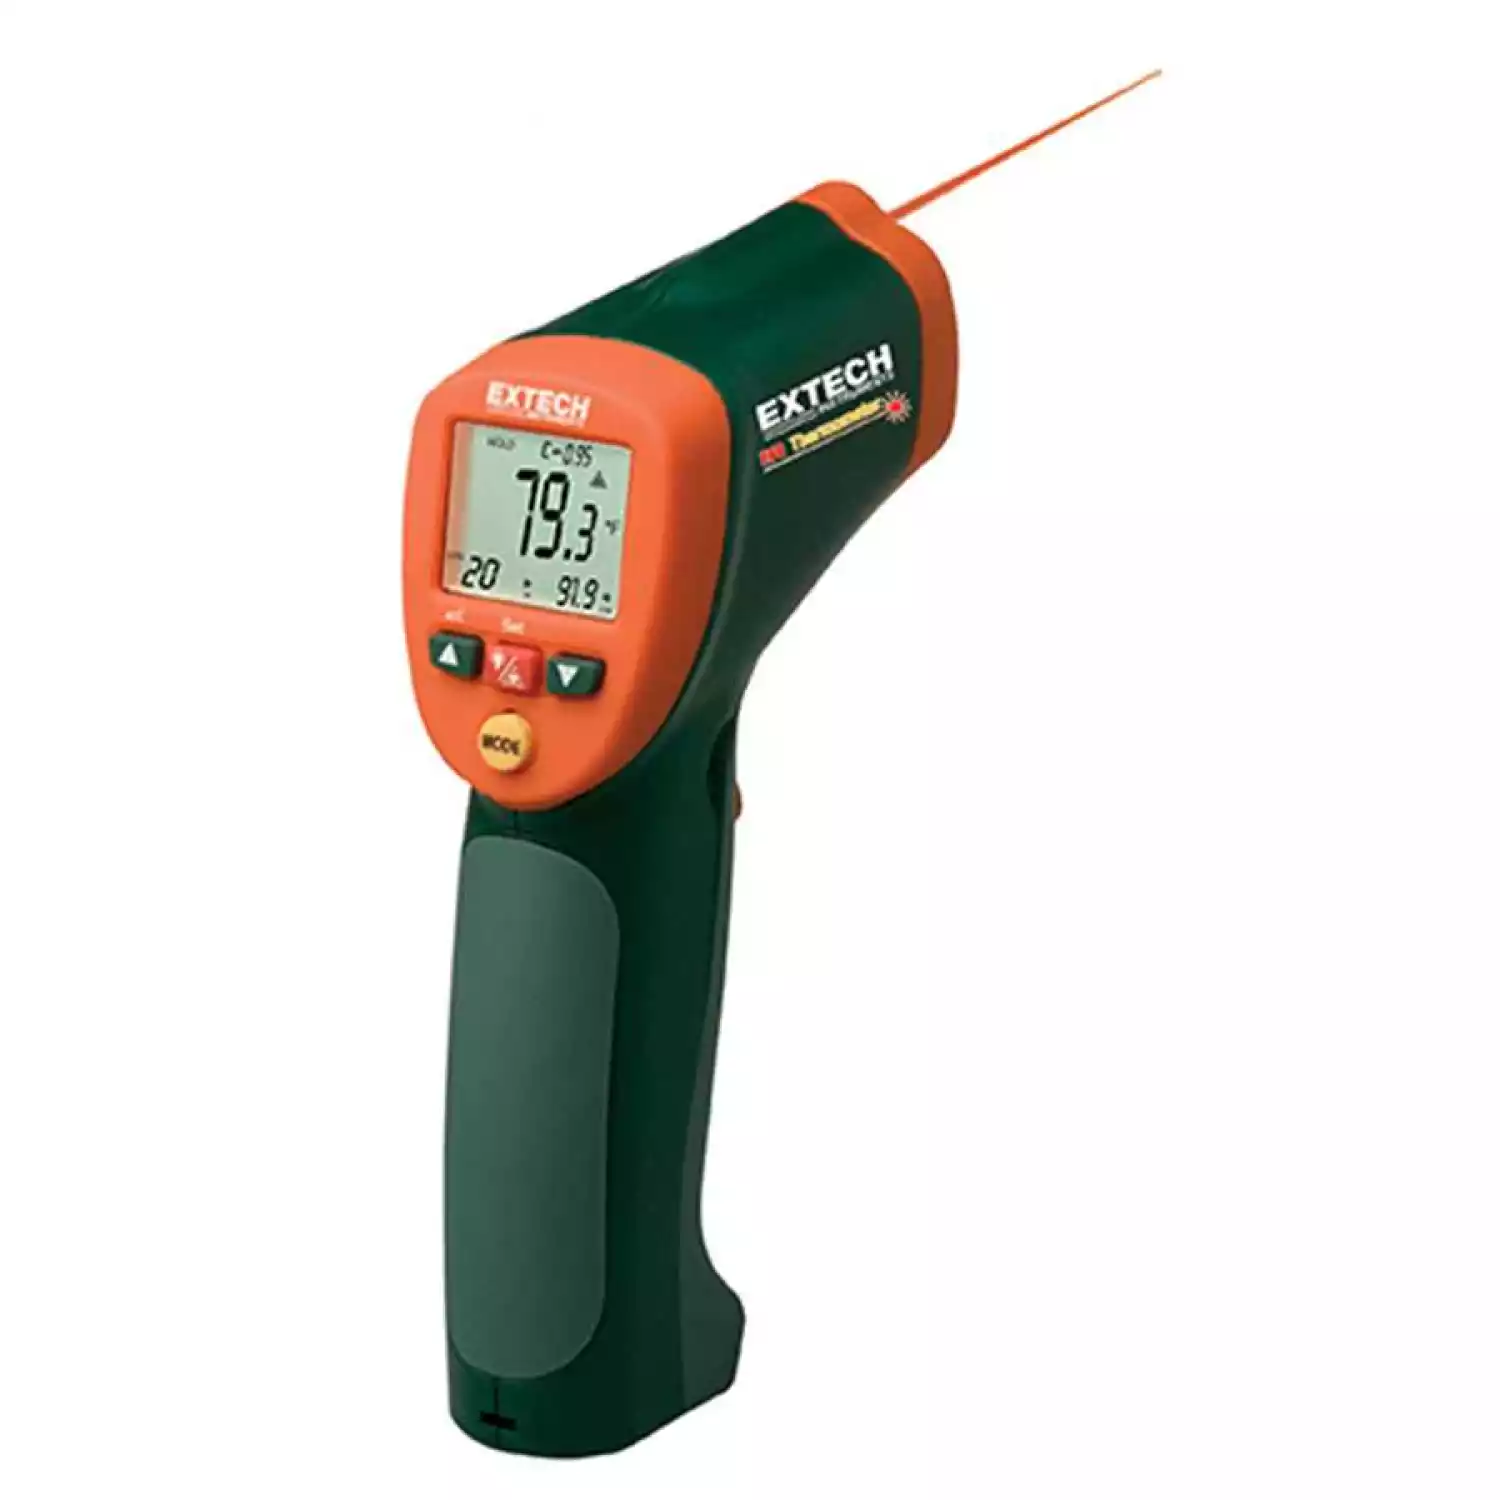 Пирометр Extech 42515 инфракрасный термометр широкого диапазона - 1